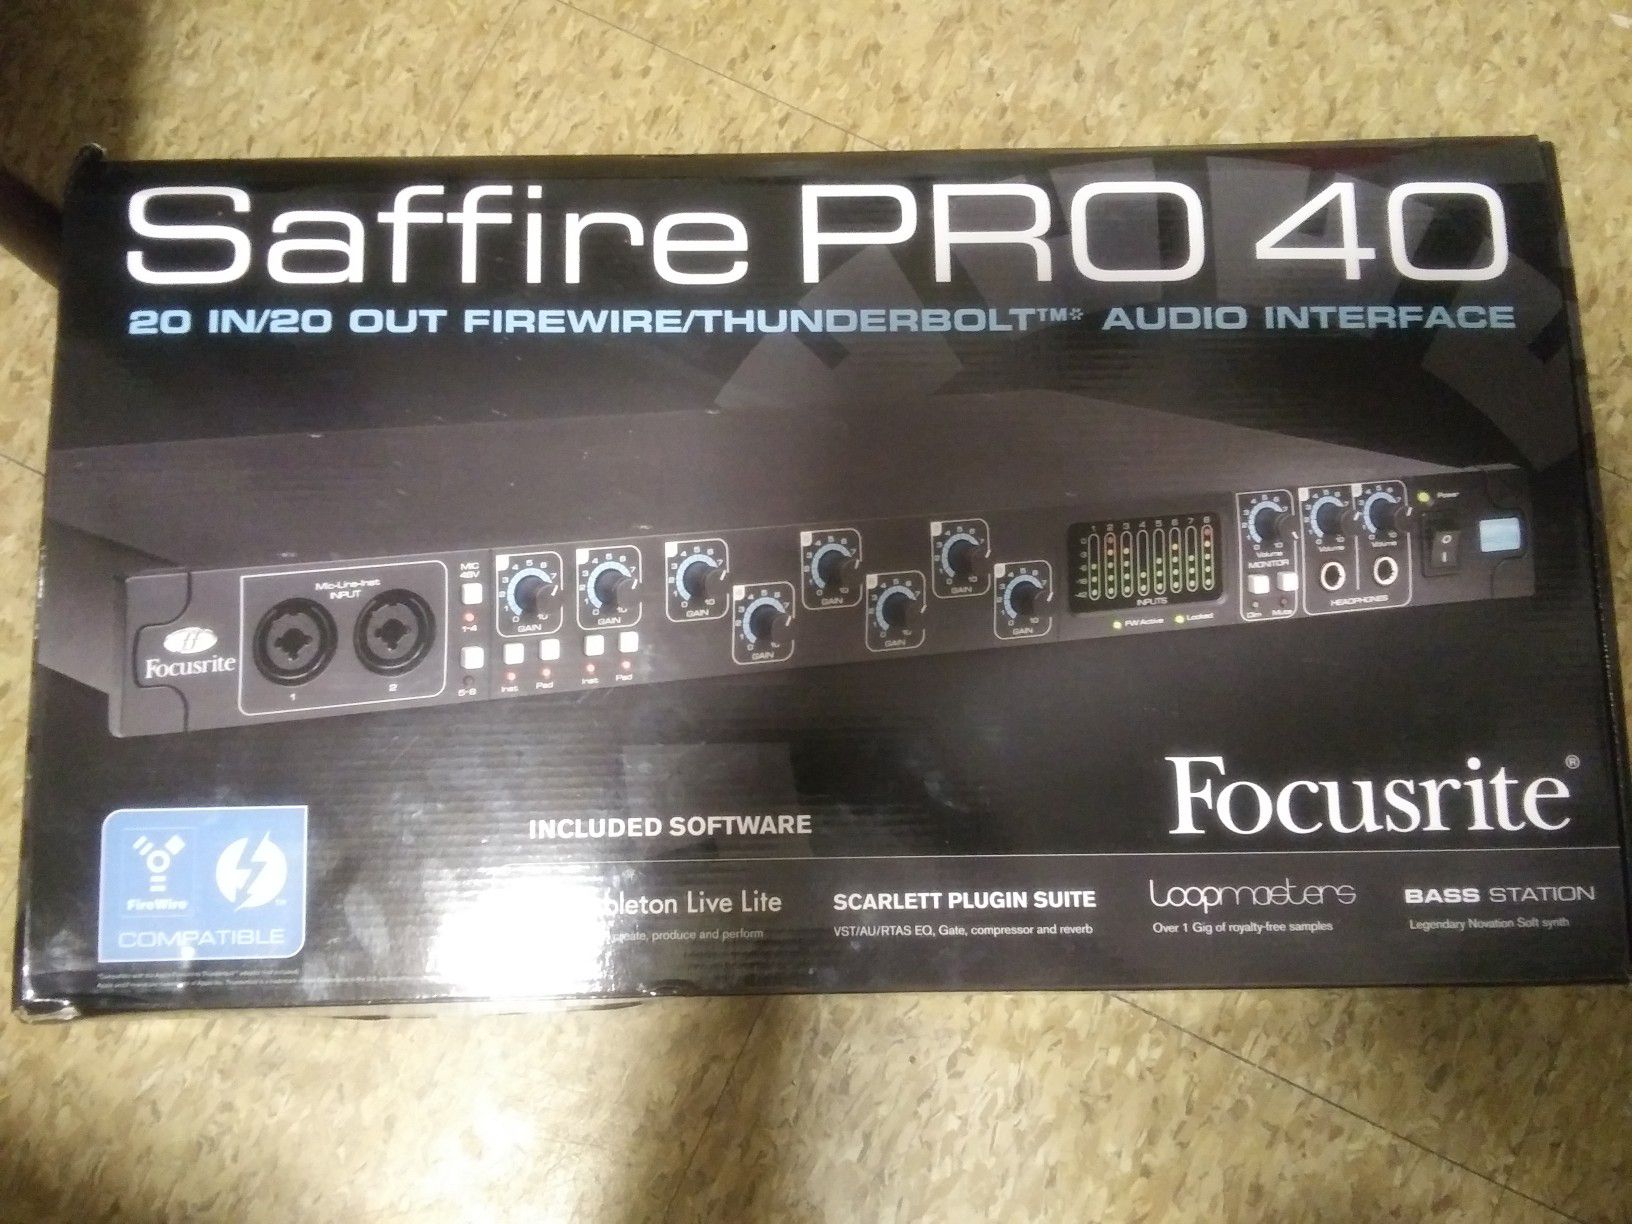 Focusrite Saffire Pro 40 Professional 20 In/20 Out Firewire Audio